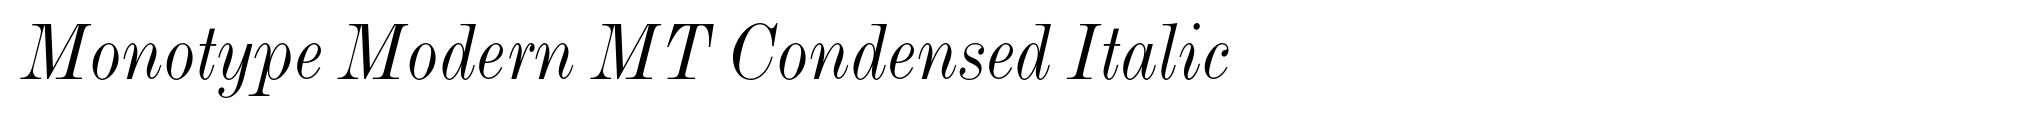 Monotype Modern MT Condensed Italic image